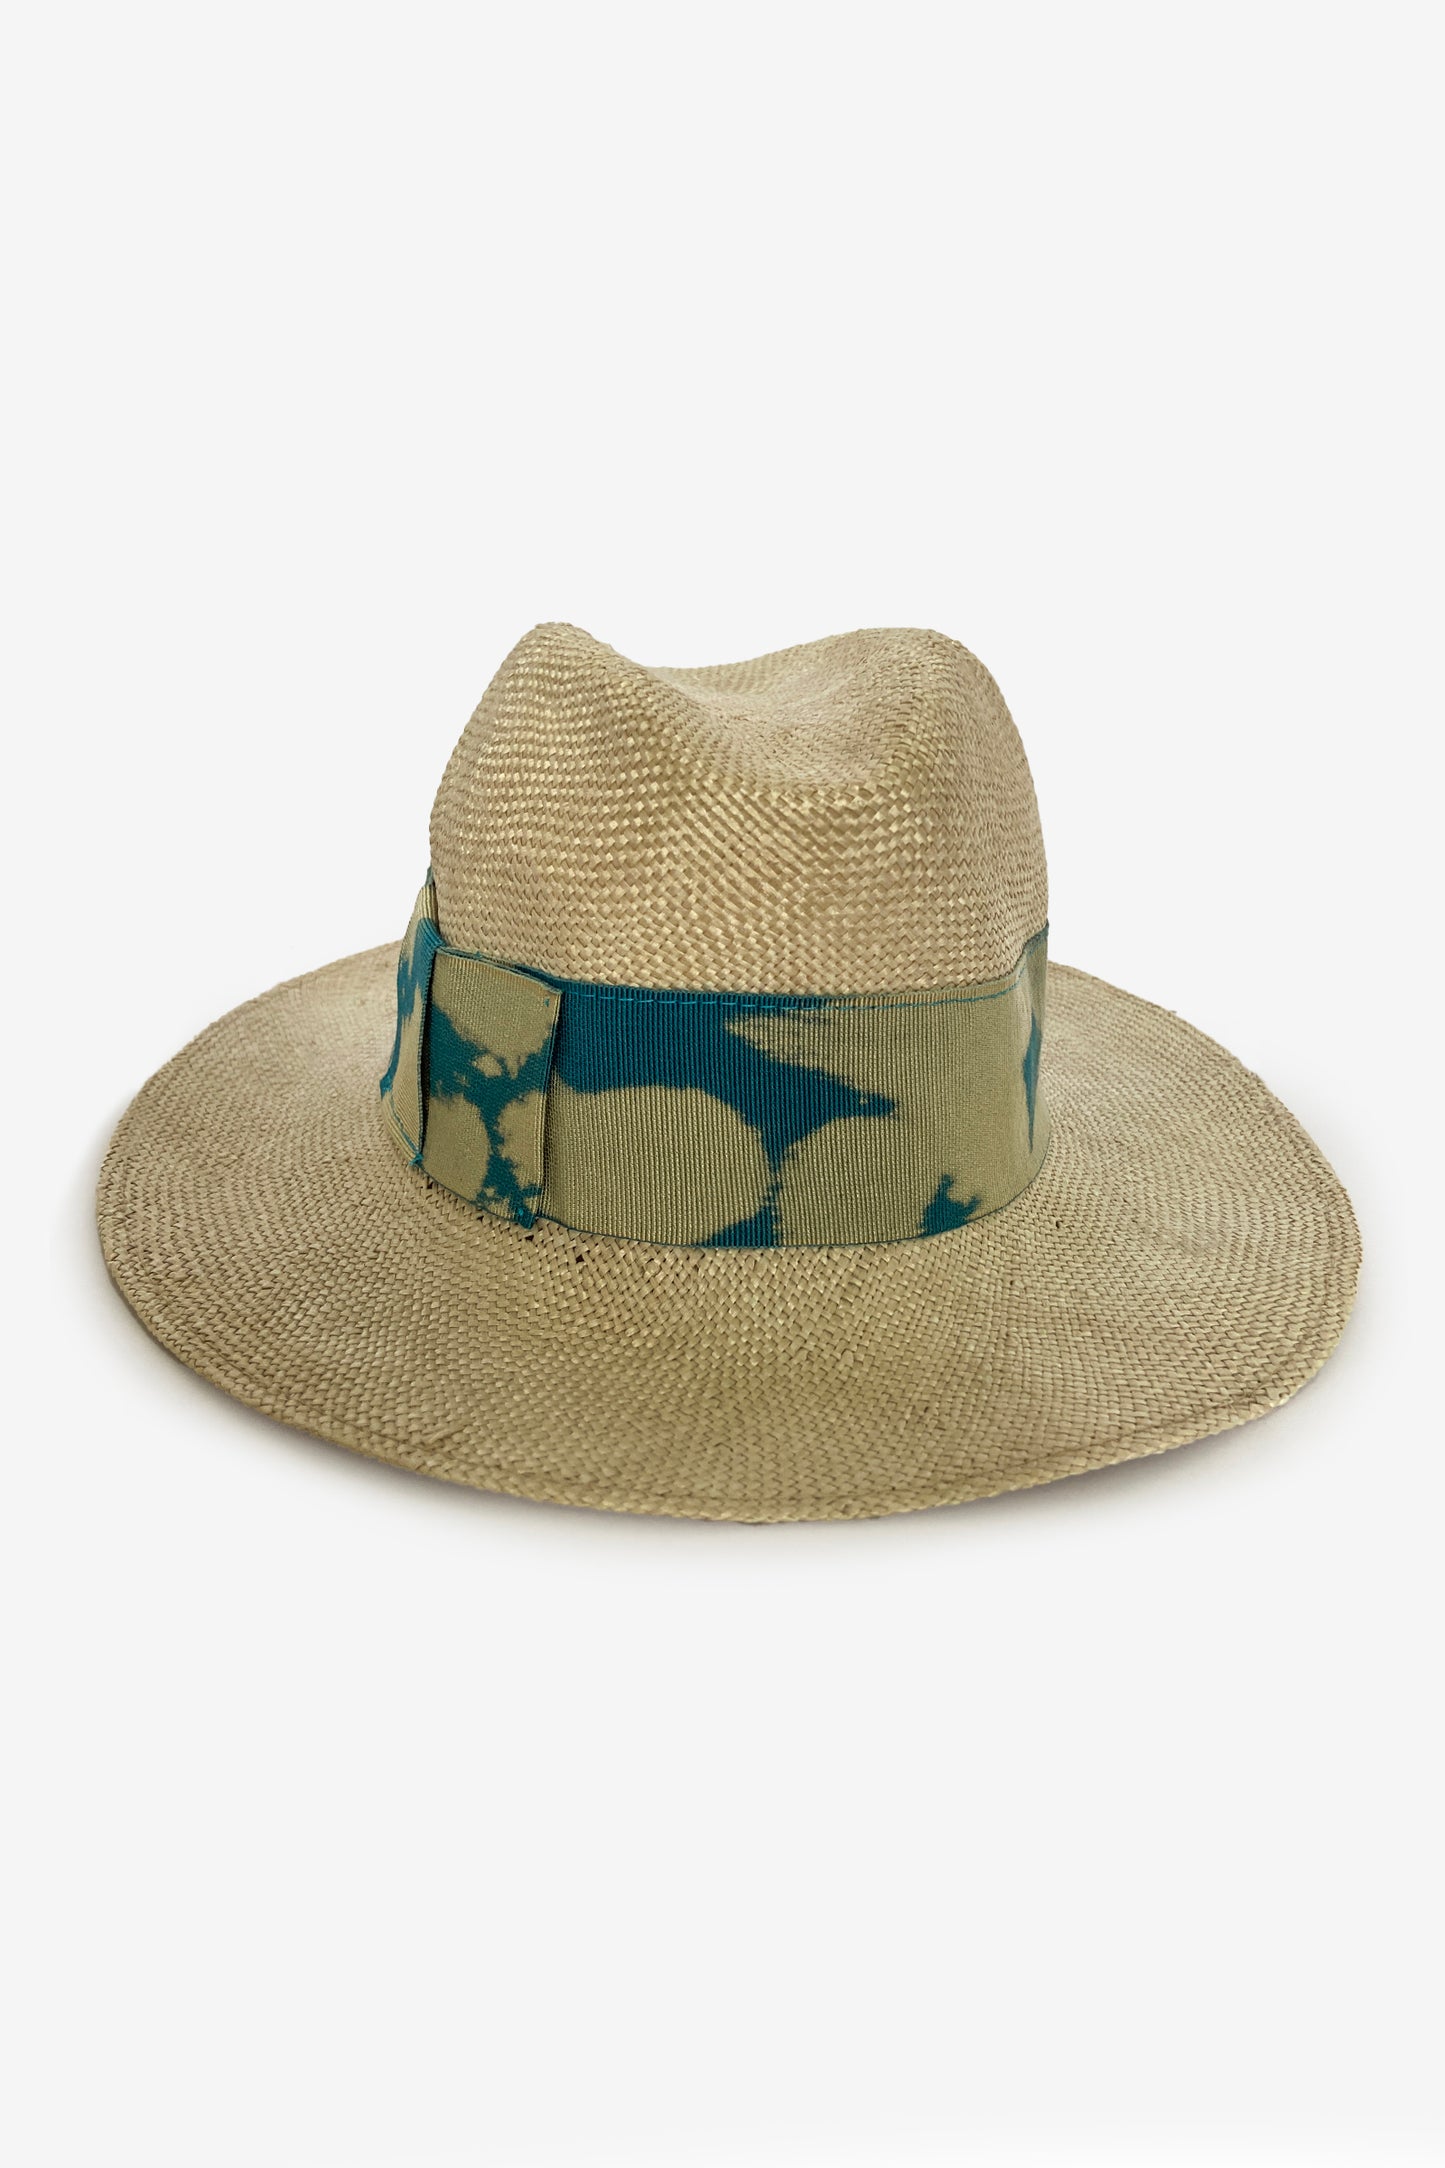 Animal print poncho + Hat + Straw bag